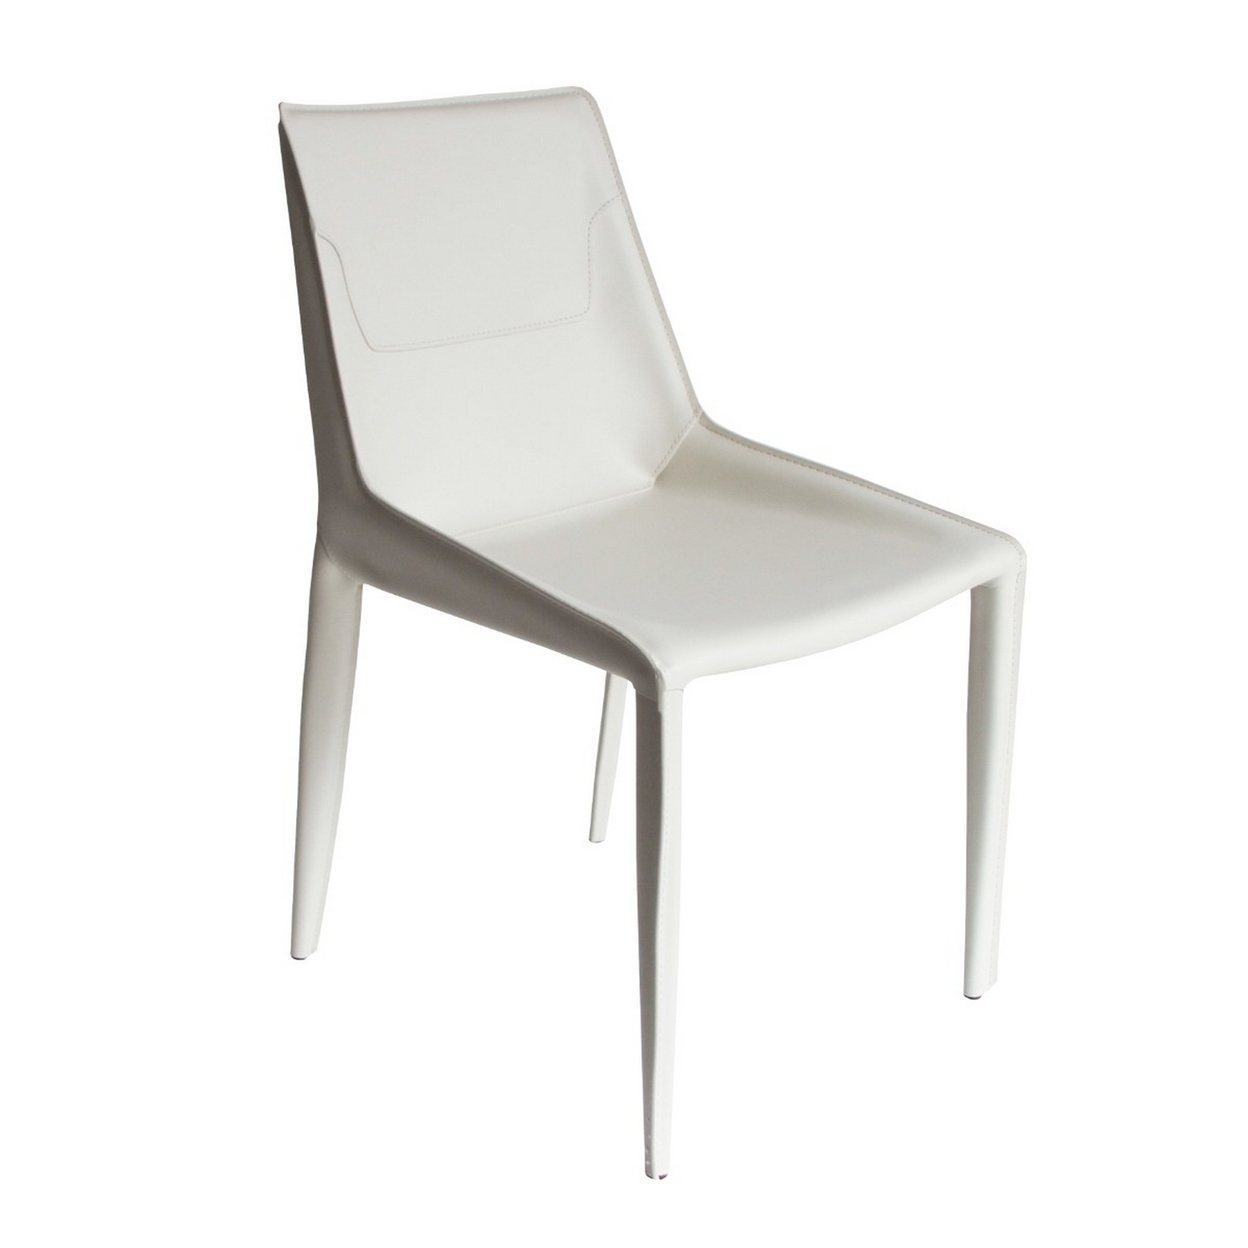 Cid Paz 18 Inch Dining Chair, Set Of 2, White Saddle Leather, Iron Frame- Saltoro Sherpi